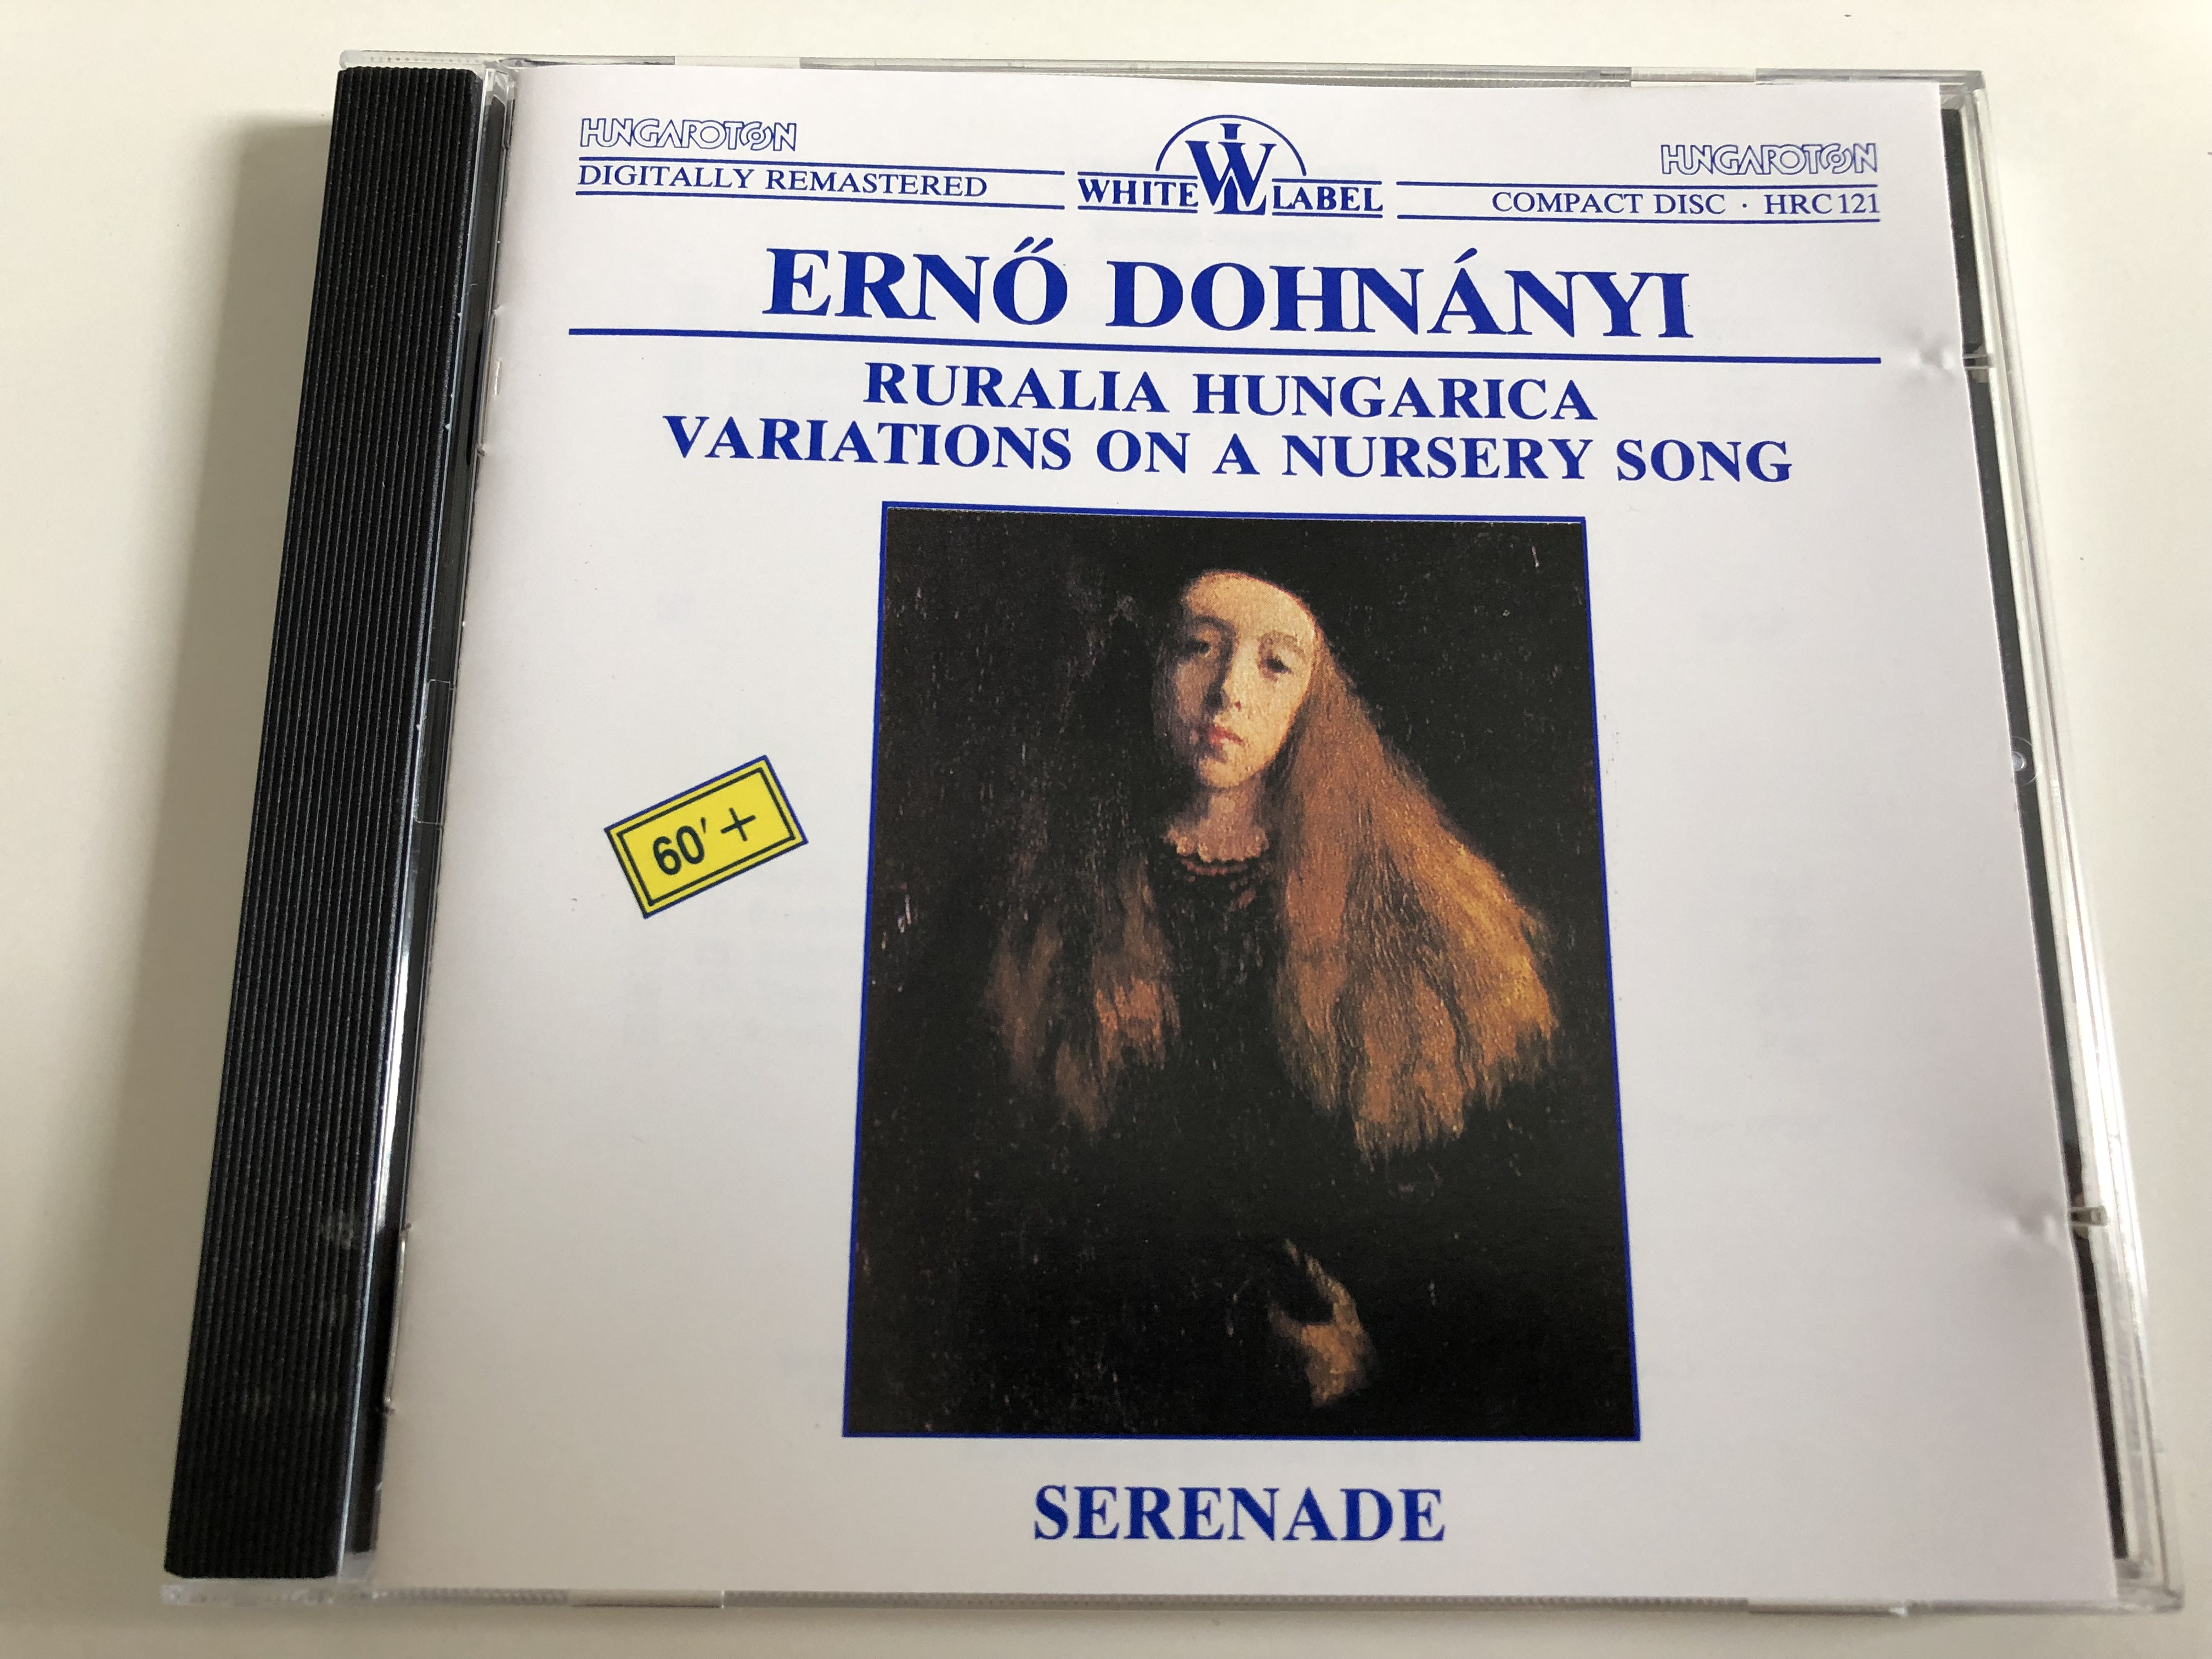 ern-dohnan-nyi-ruralia-hungarica-variations-on-a-nursery-song-serenade-hungaroton-white-label-hrc-121-audio-cd-1989-1-.jpg